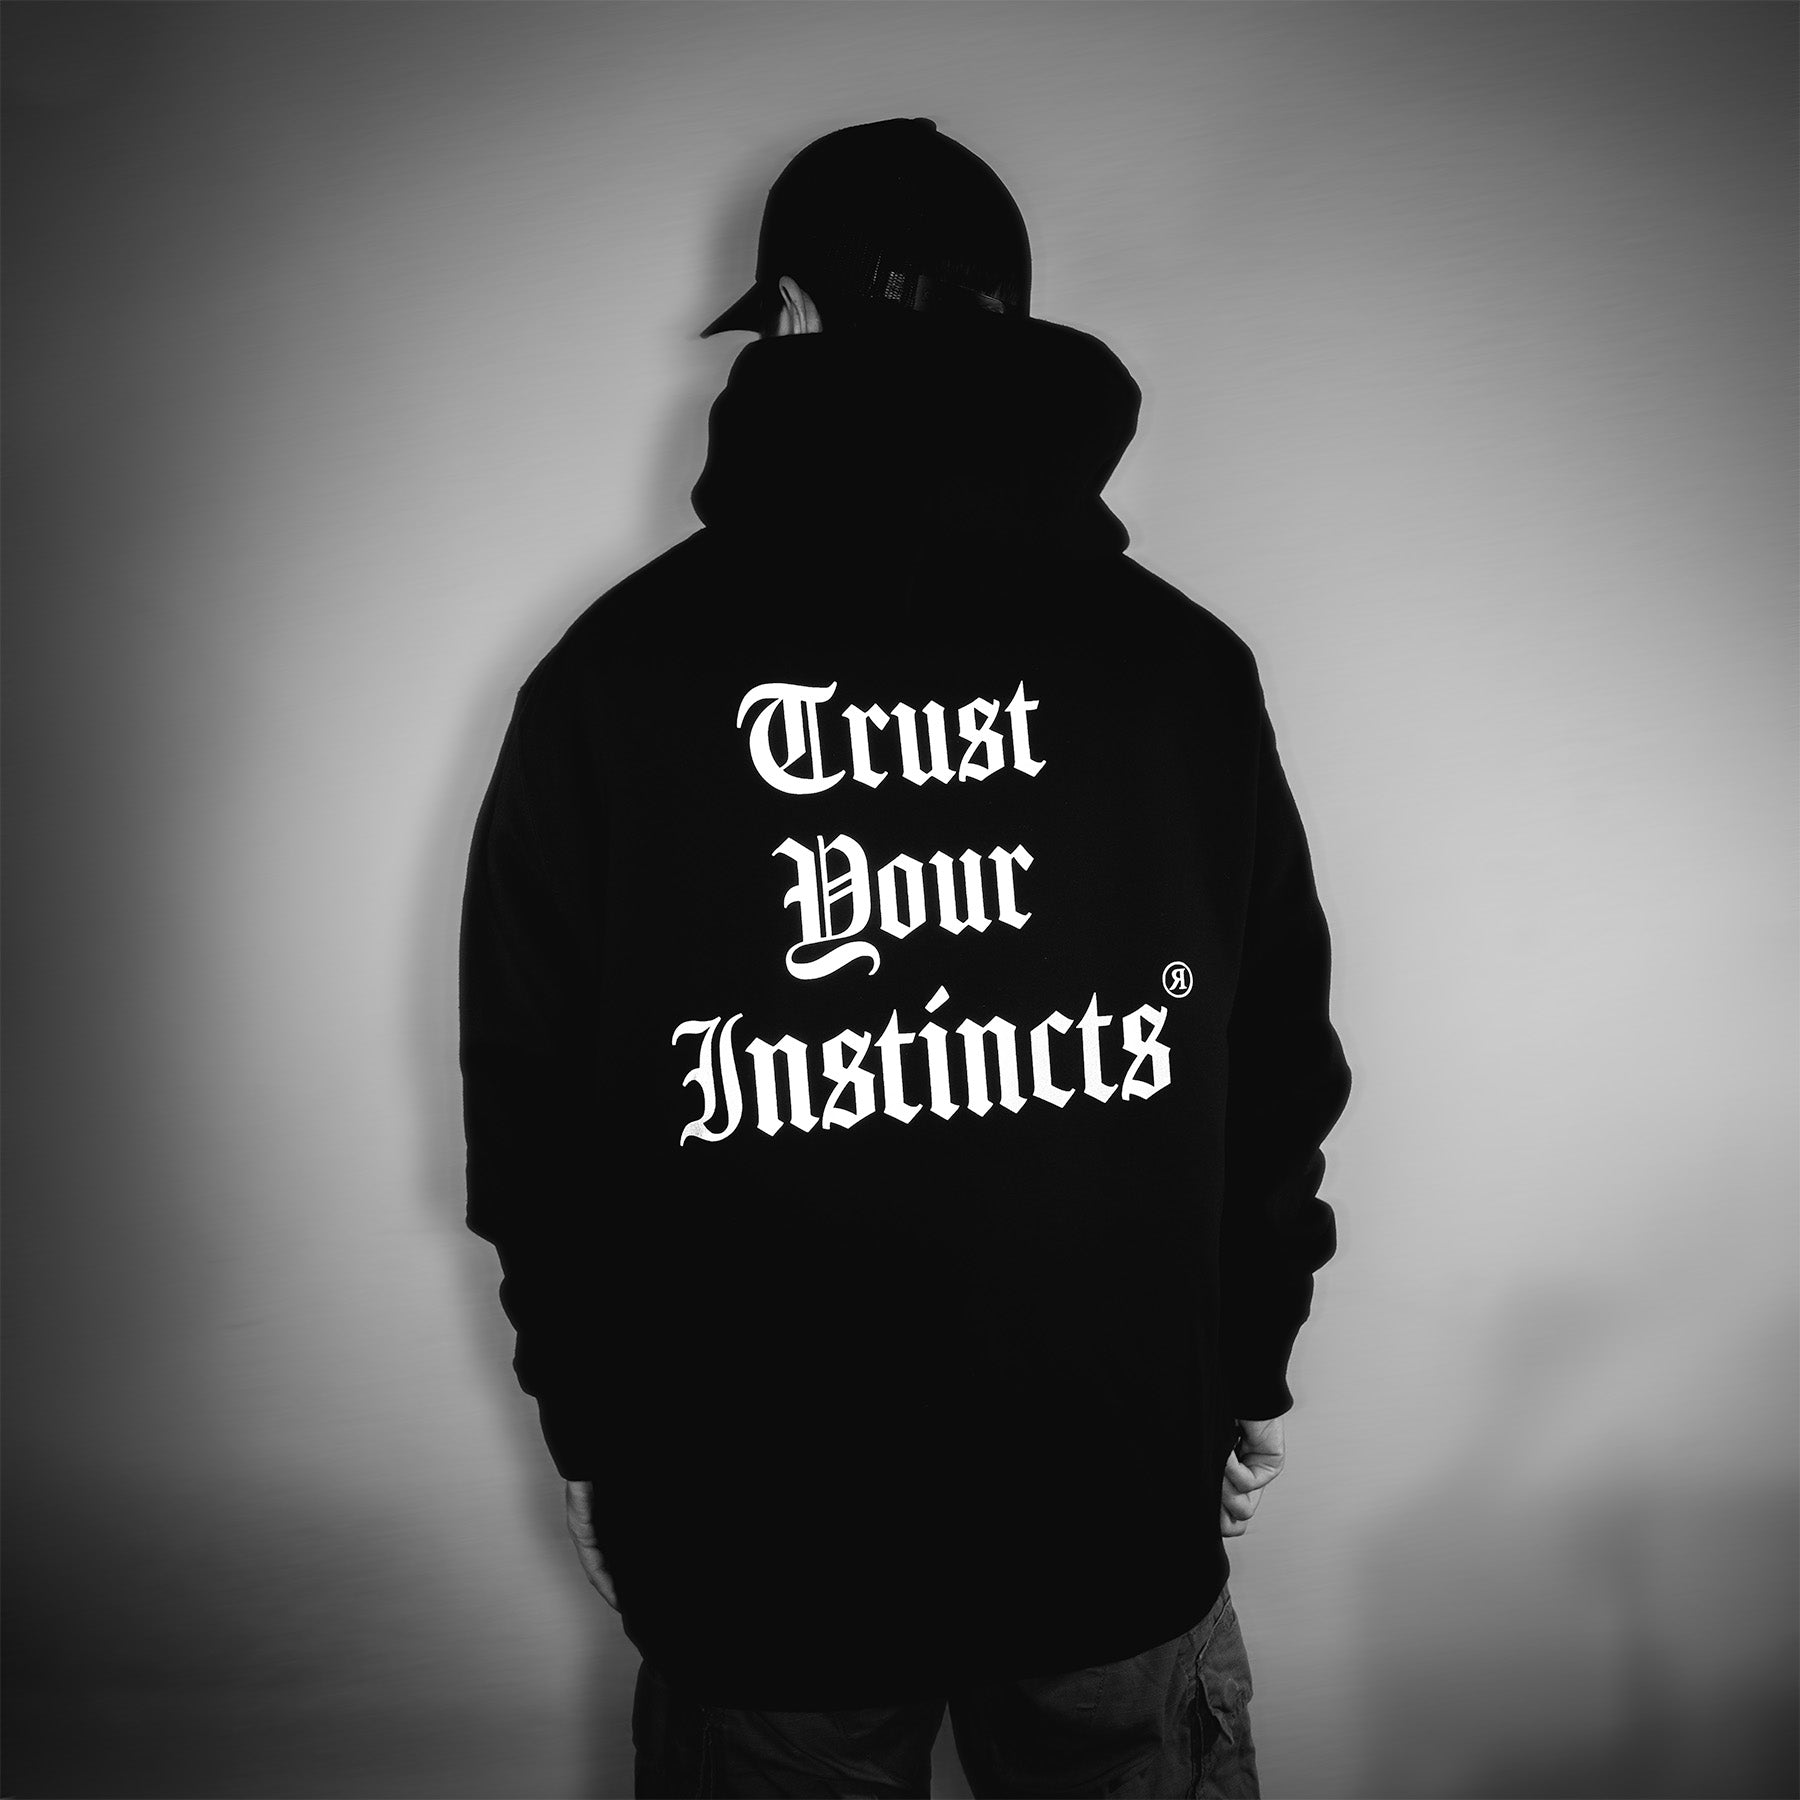 Trust Your Instincts [Vision] 3M Hoodie / Black - IKendoit.Shop